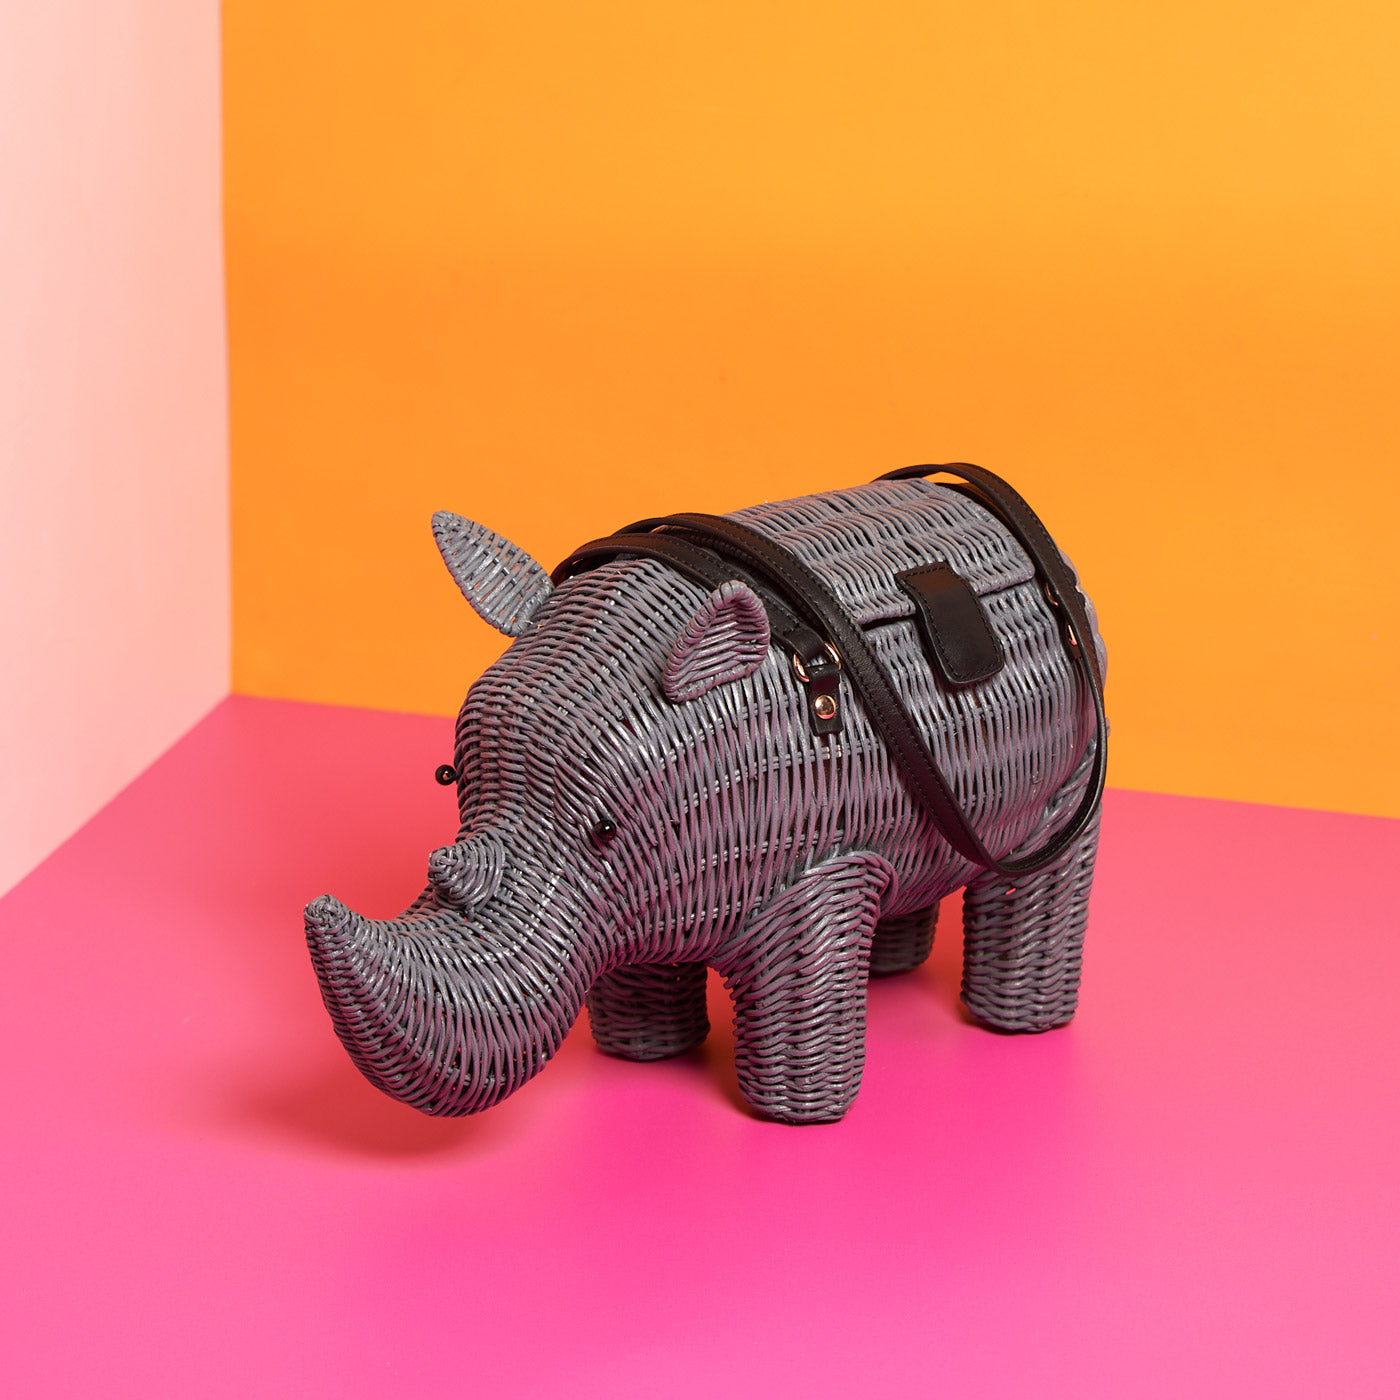 Elephant Saving Bank is a piggy bank with locker made of Iron : Artlivo